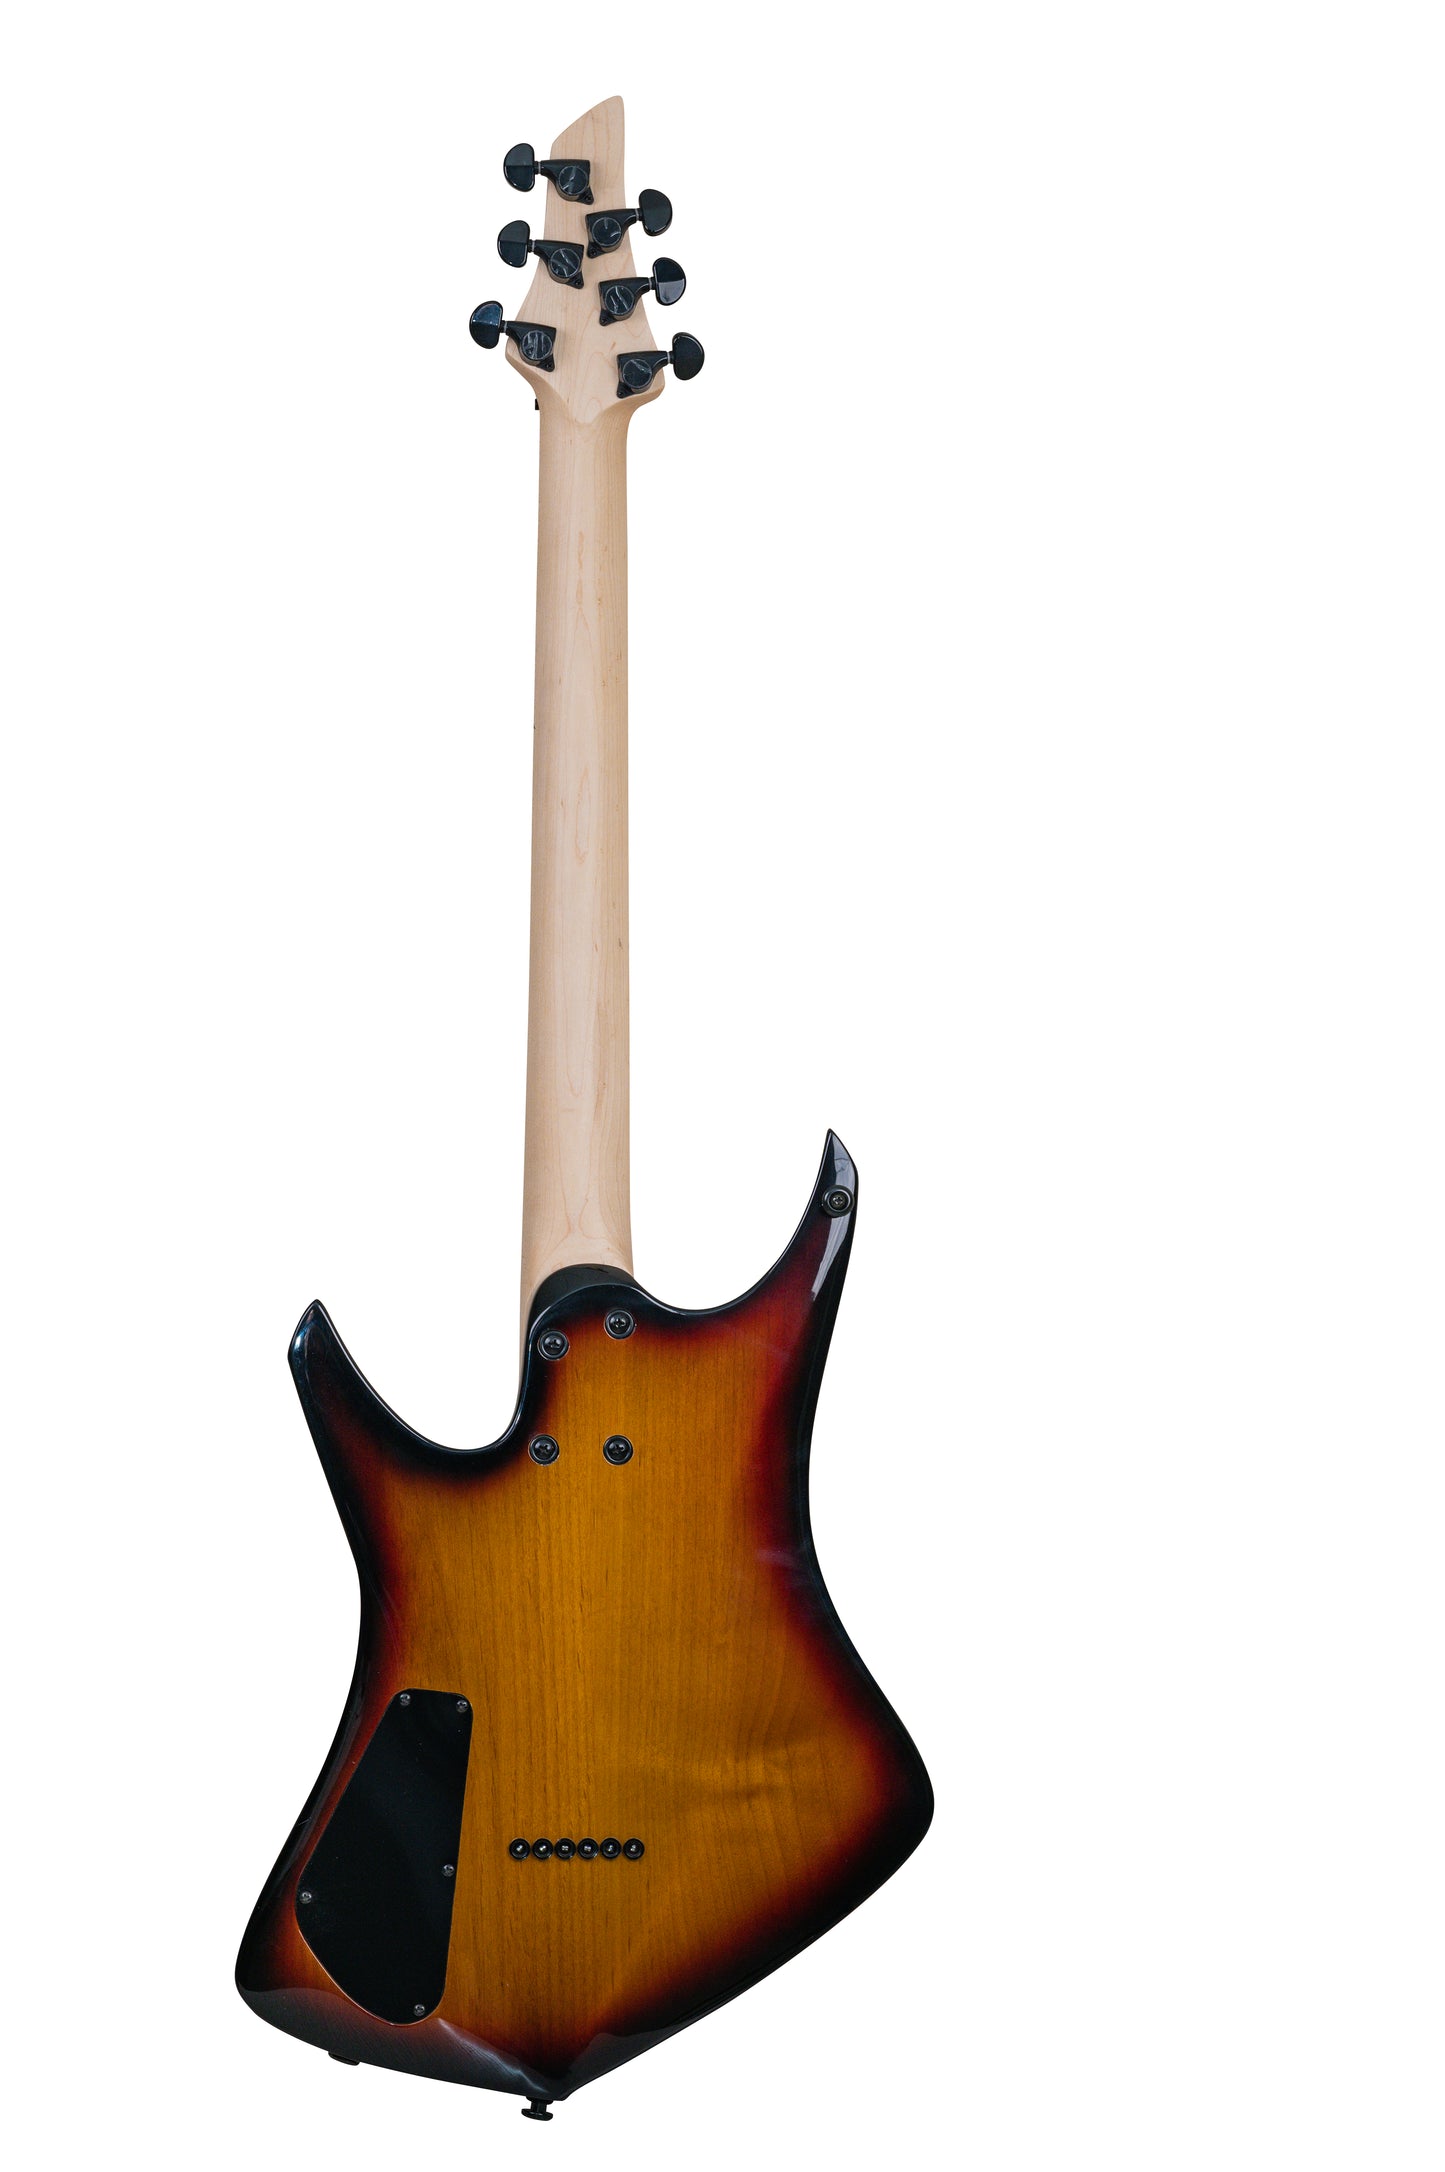 Latitude Phoenix Guitar 6 String 24 Frets Electic Guitar Killer key Alder Body H-H Pickups Guitar Double truss rod with Carbon fiber rods